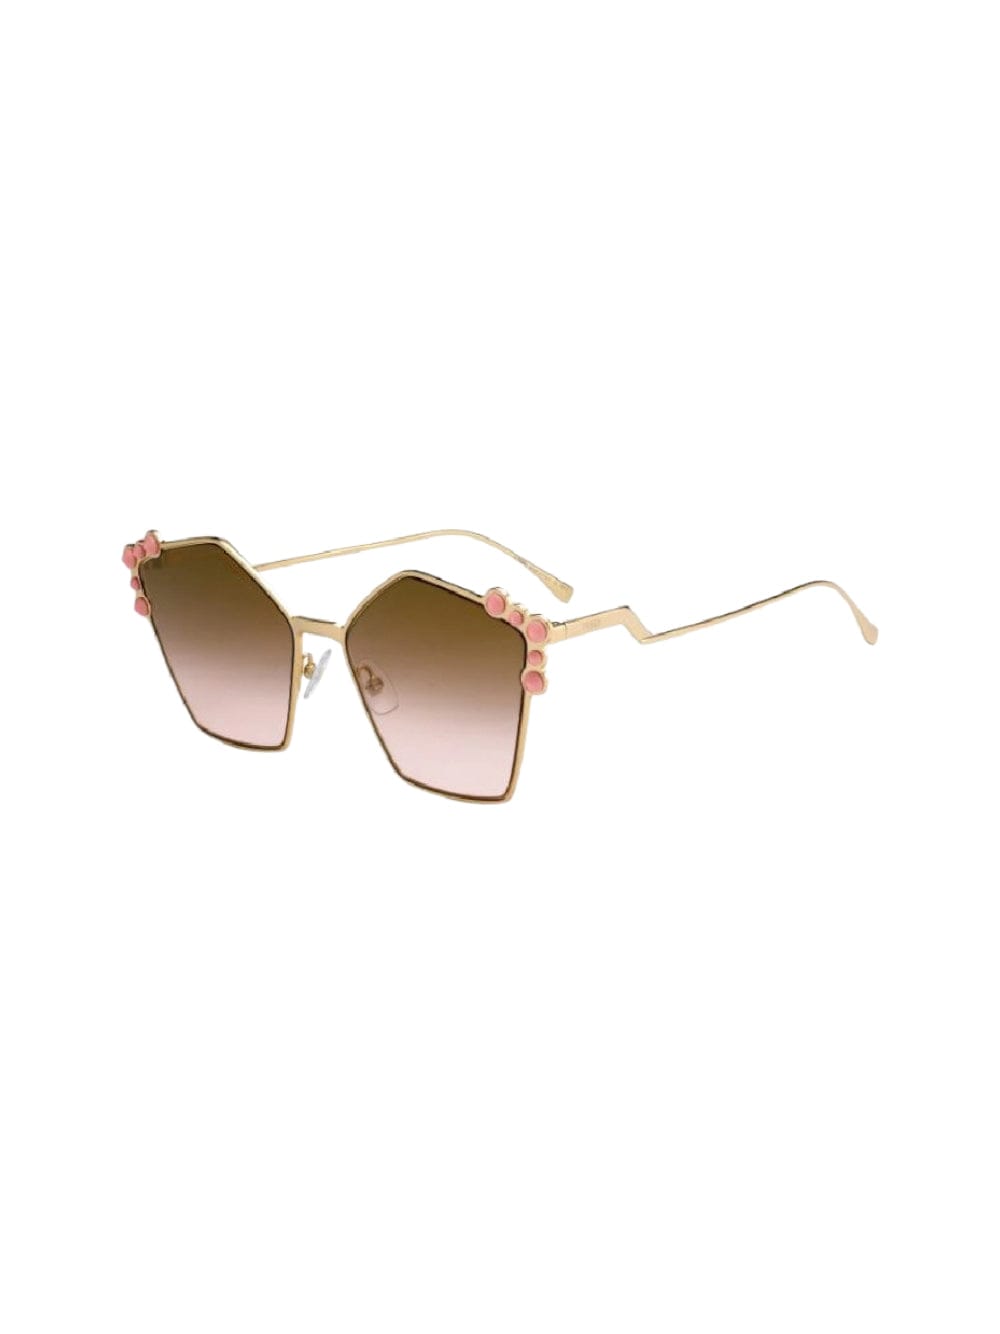 Fendi Eyewear Ff 0261 - Gold Sunglasses